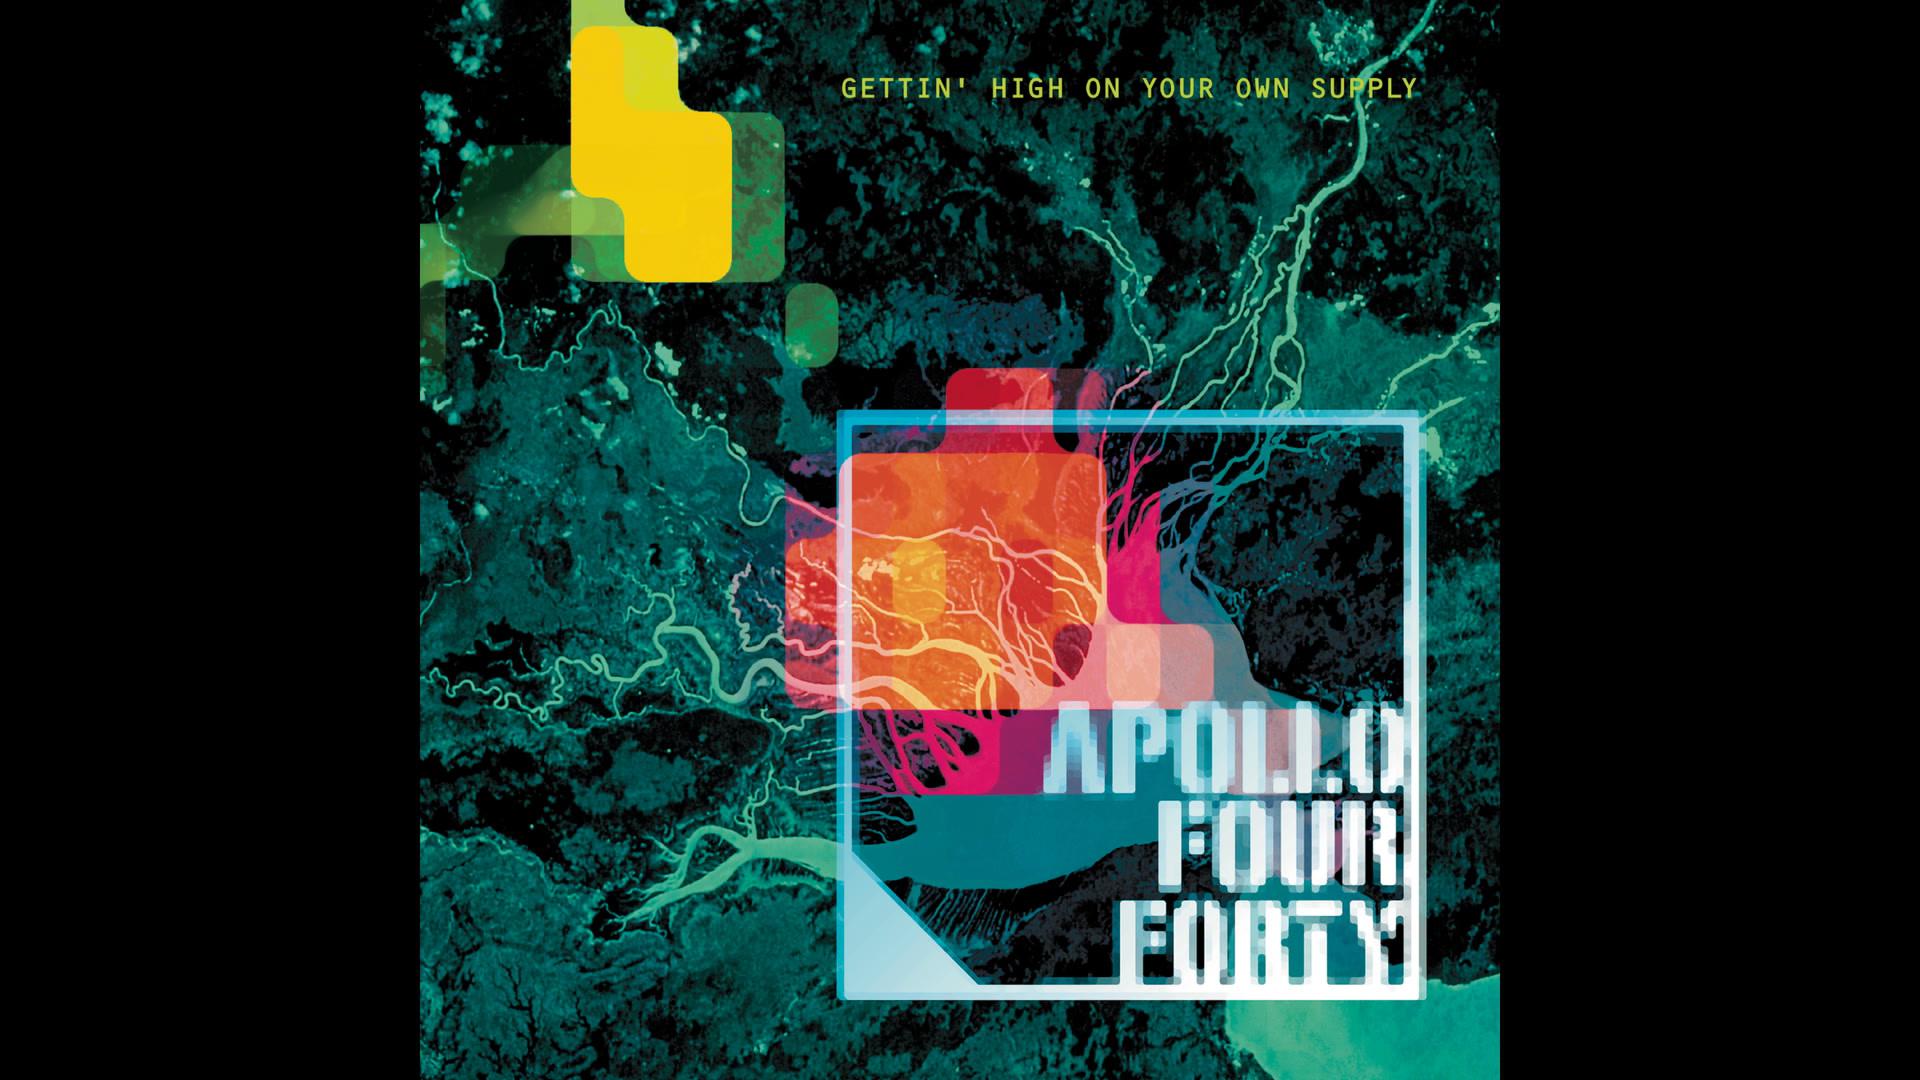 Apollo 440 - Crazee Horse (Instrumental Version) [Official Audio]